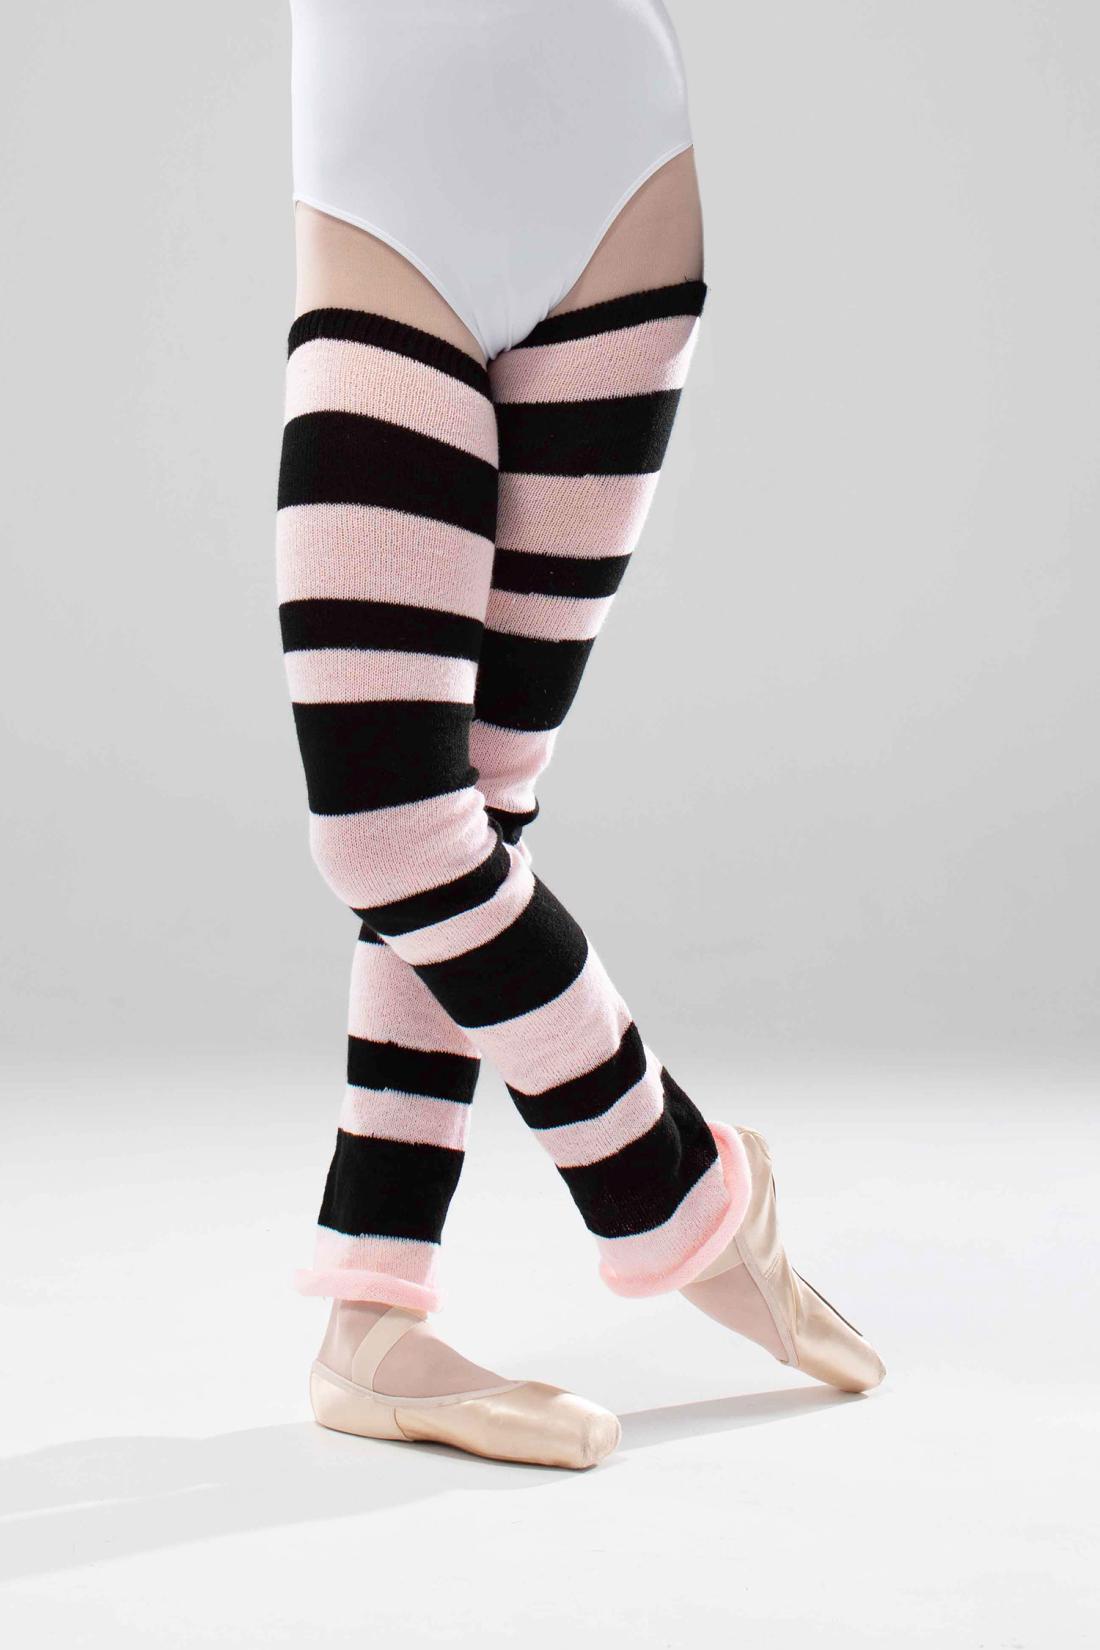 Polpay Striped knit legwarmers Intermezzo dance ballet